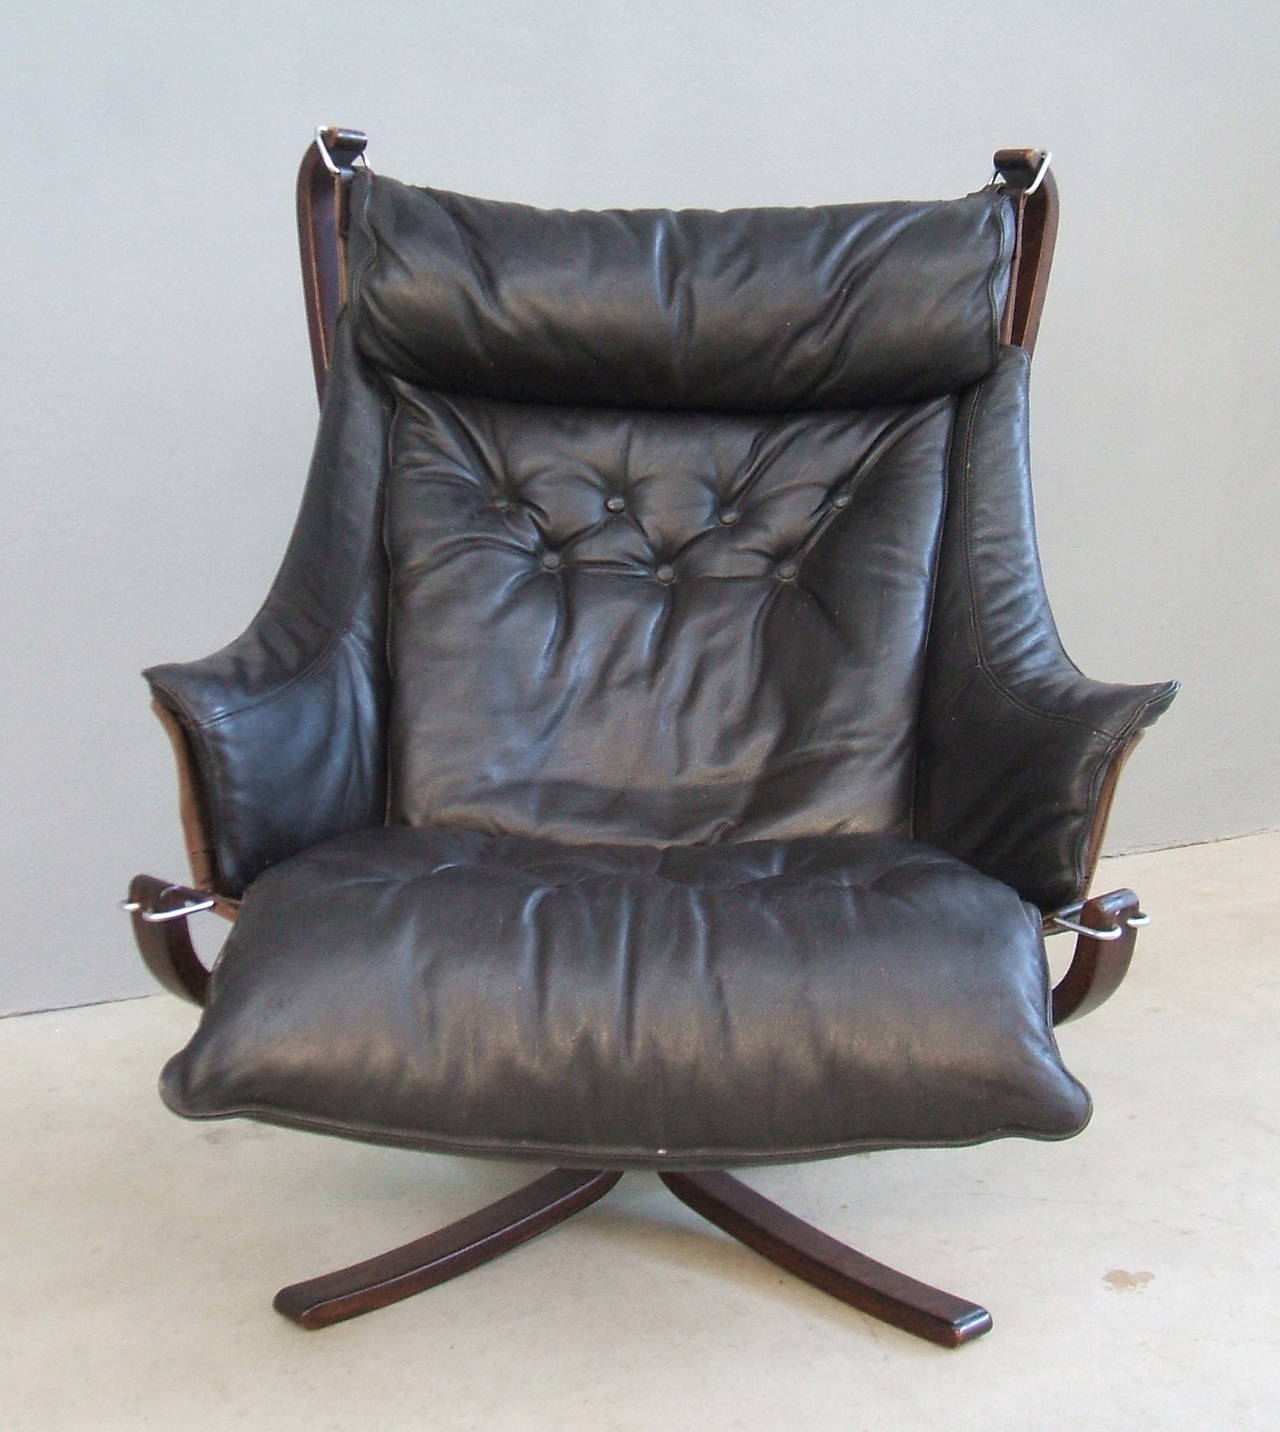 Very comfortable Falcon chair. Dark blown original leather.
Very good vintage condition.